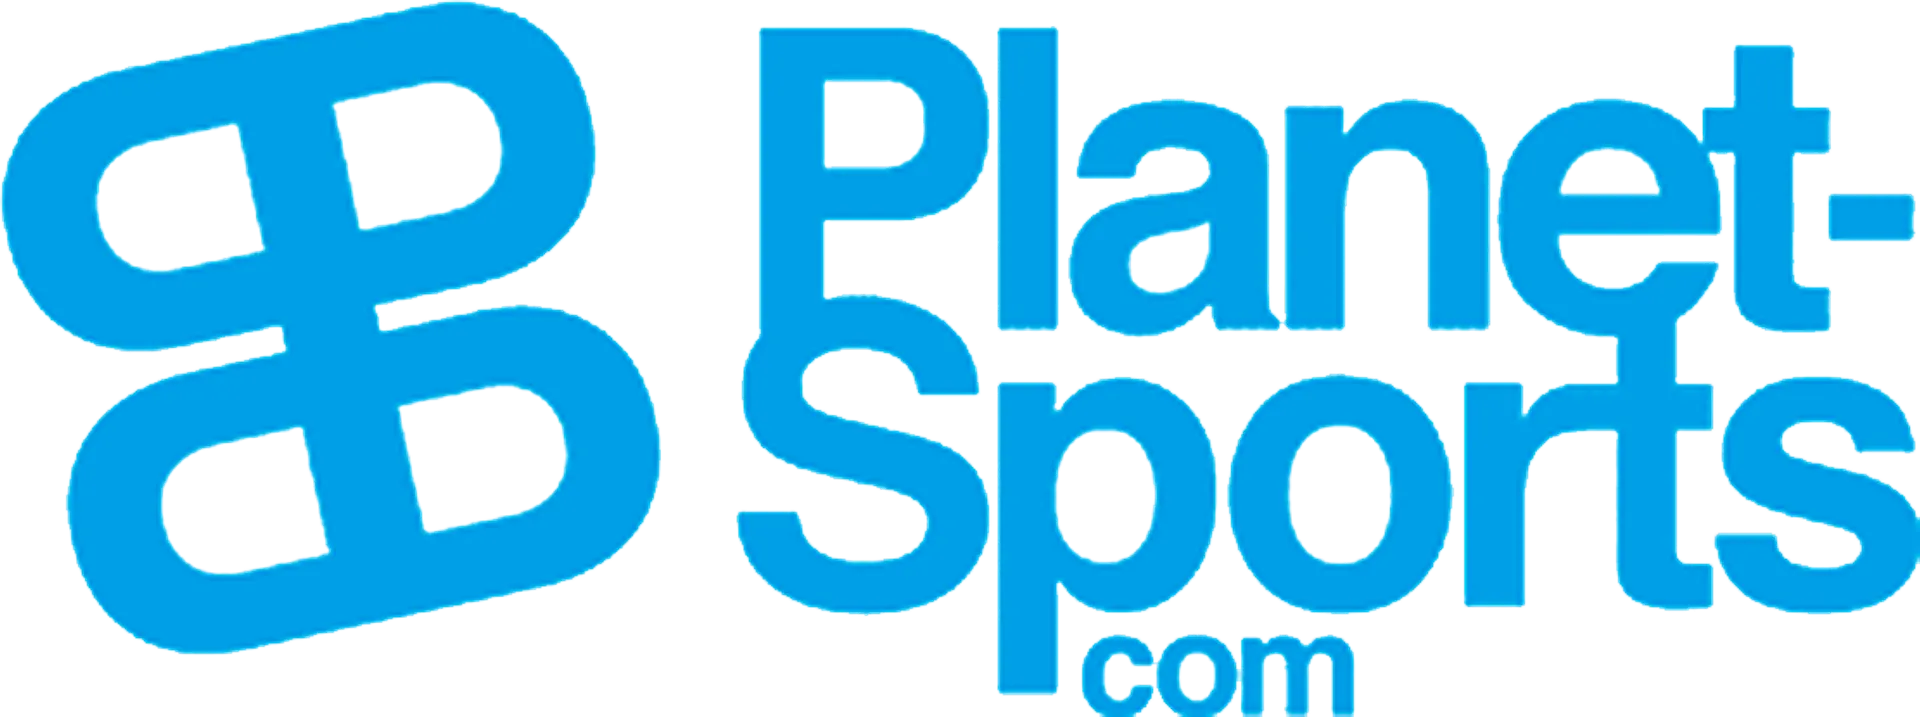 PLANET SPORTS logo. Current catalogue